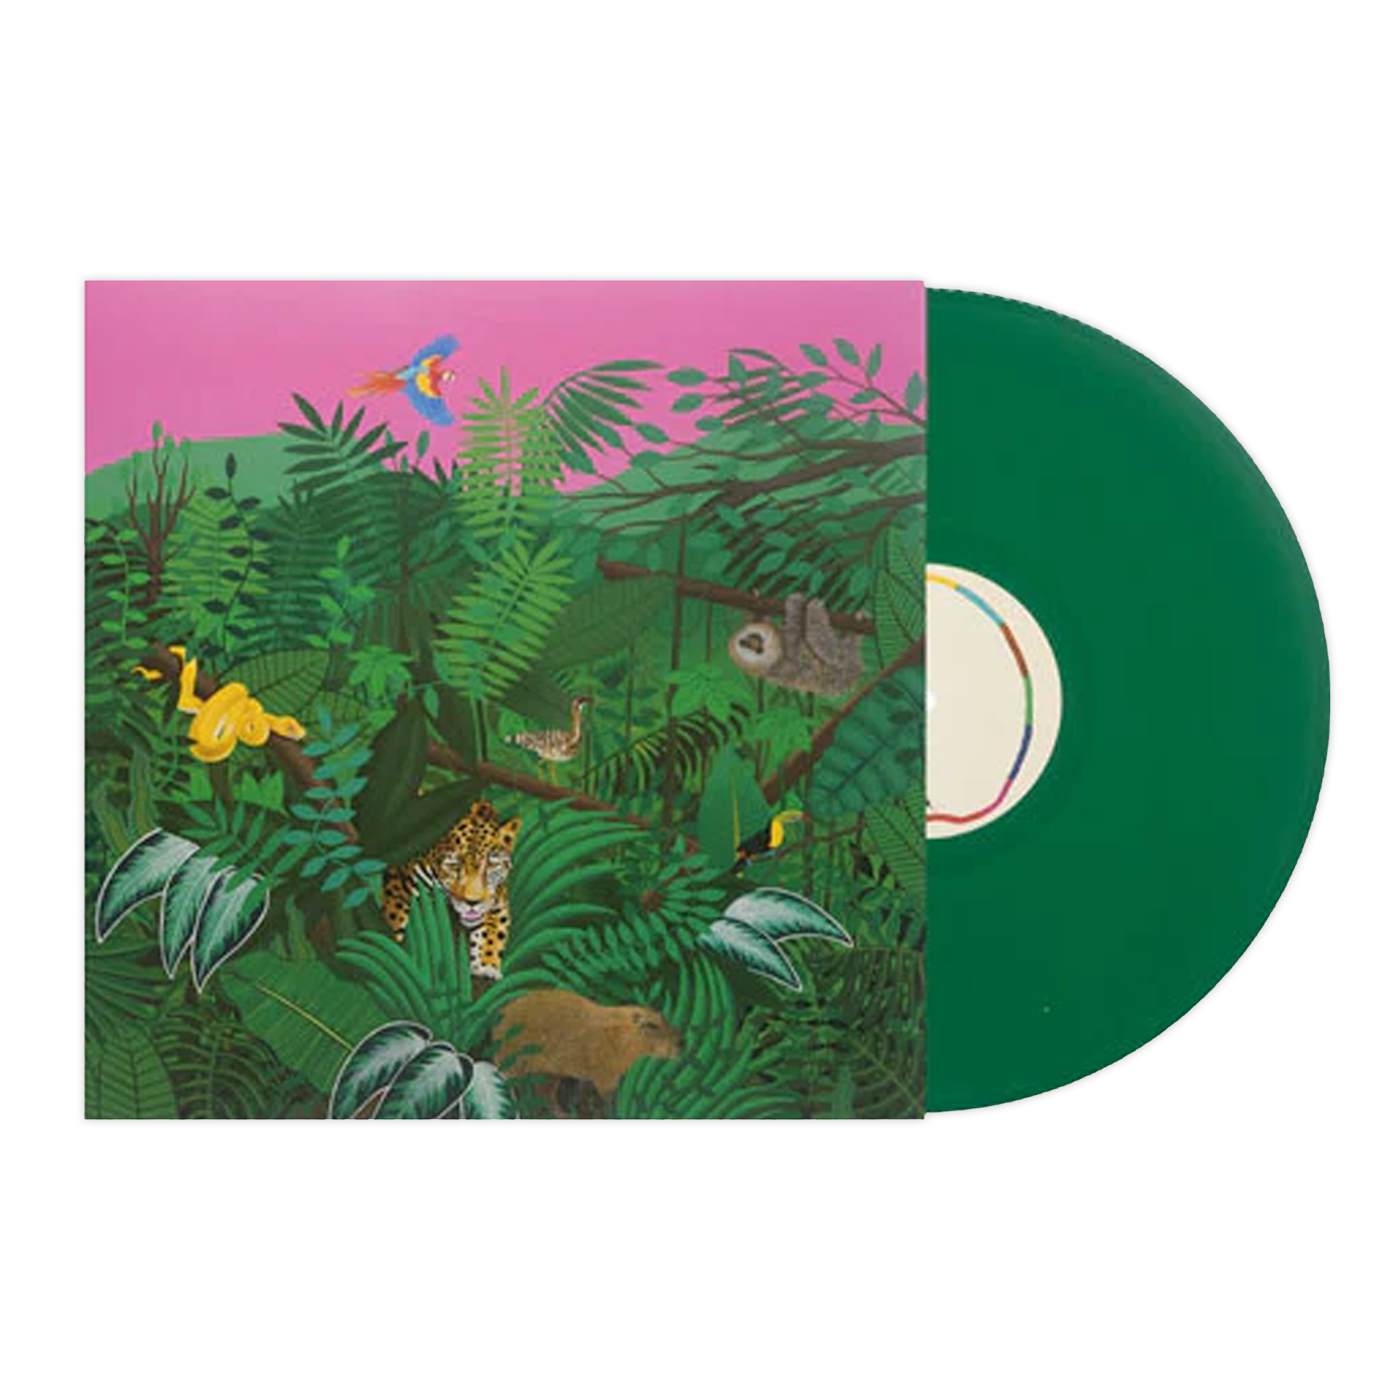 Turnover - "Good Nature" LP (Vinyl)